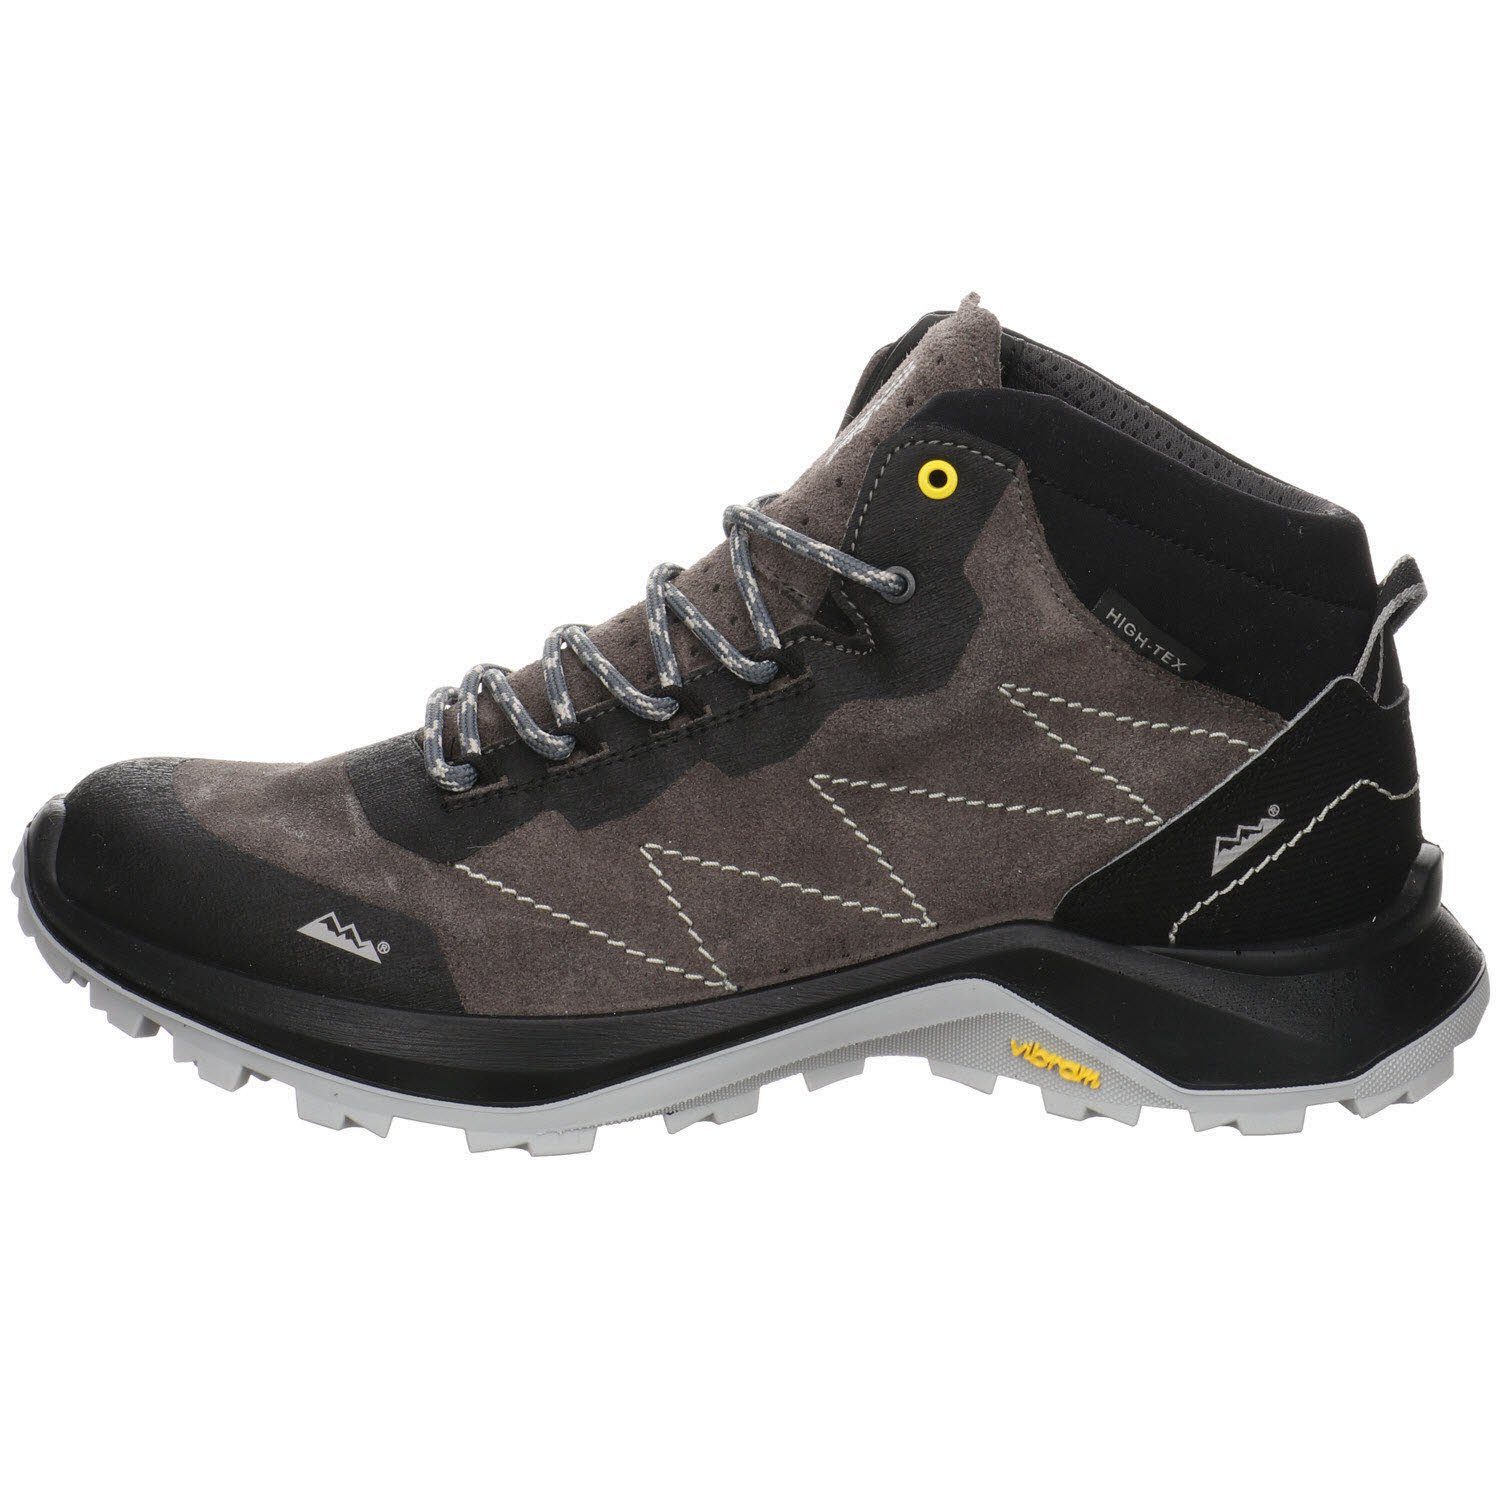 High Colorado Herren Outdoor Schuhe Evo Trail Mid Outdoorschuh Outdoorschuh Leder-/Textilkombination